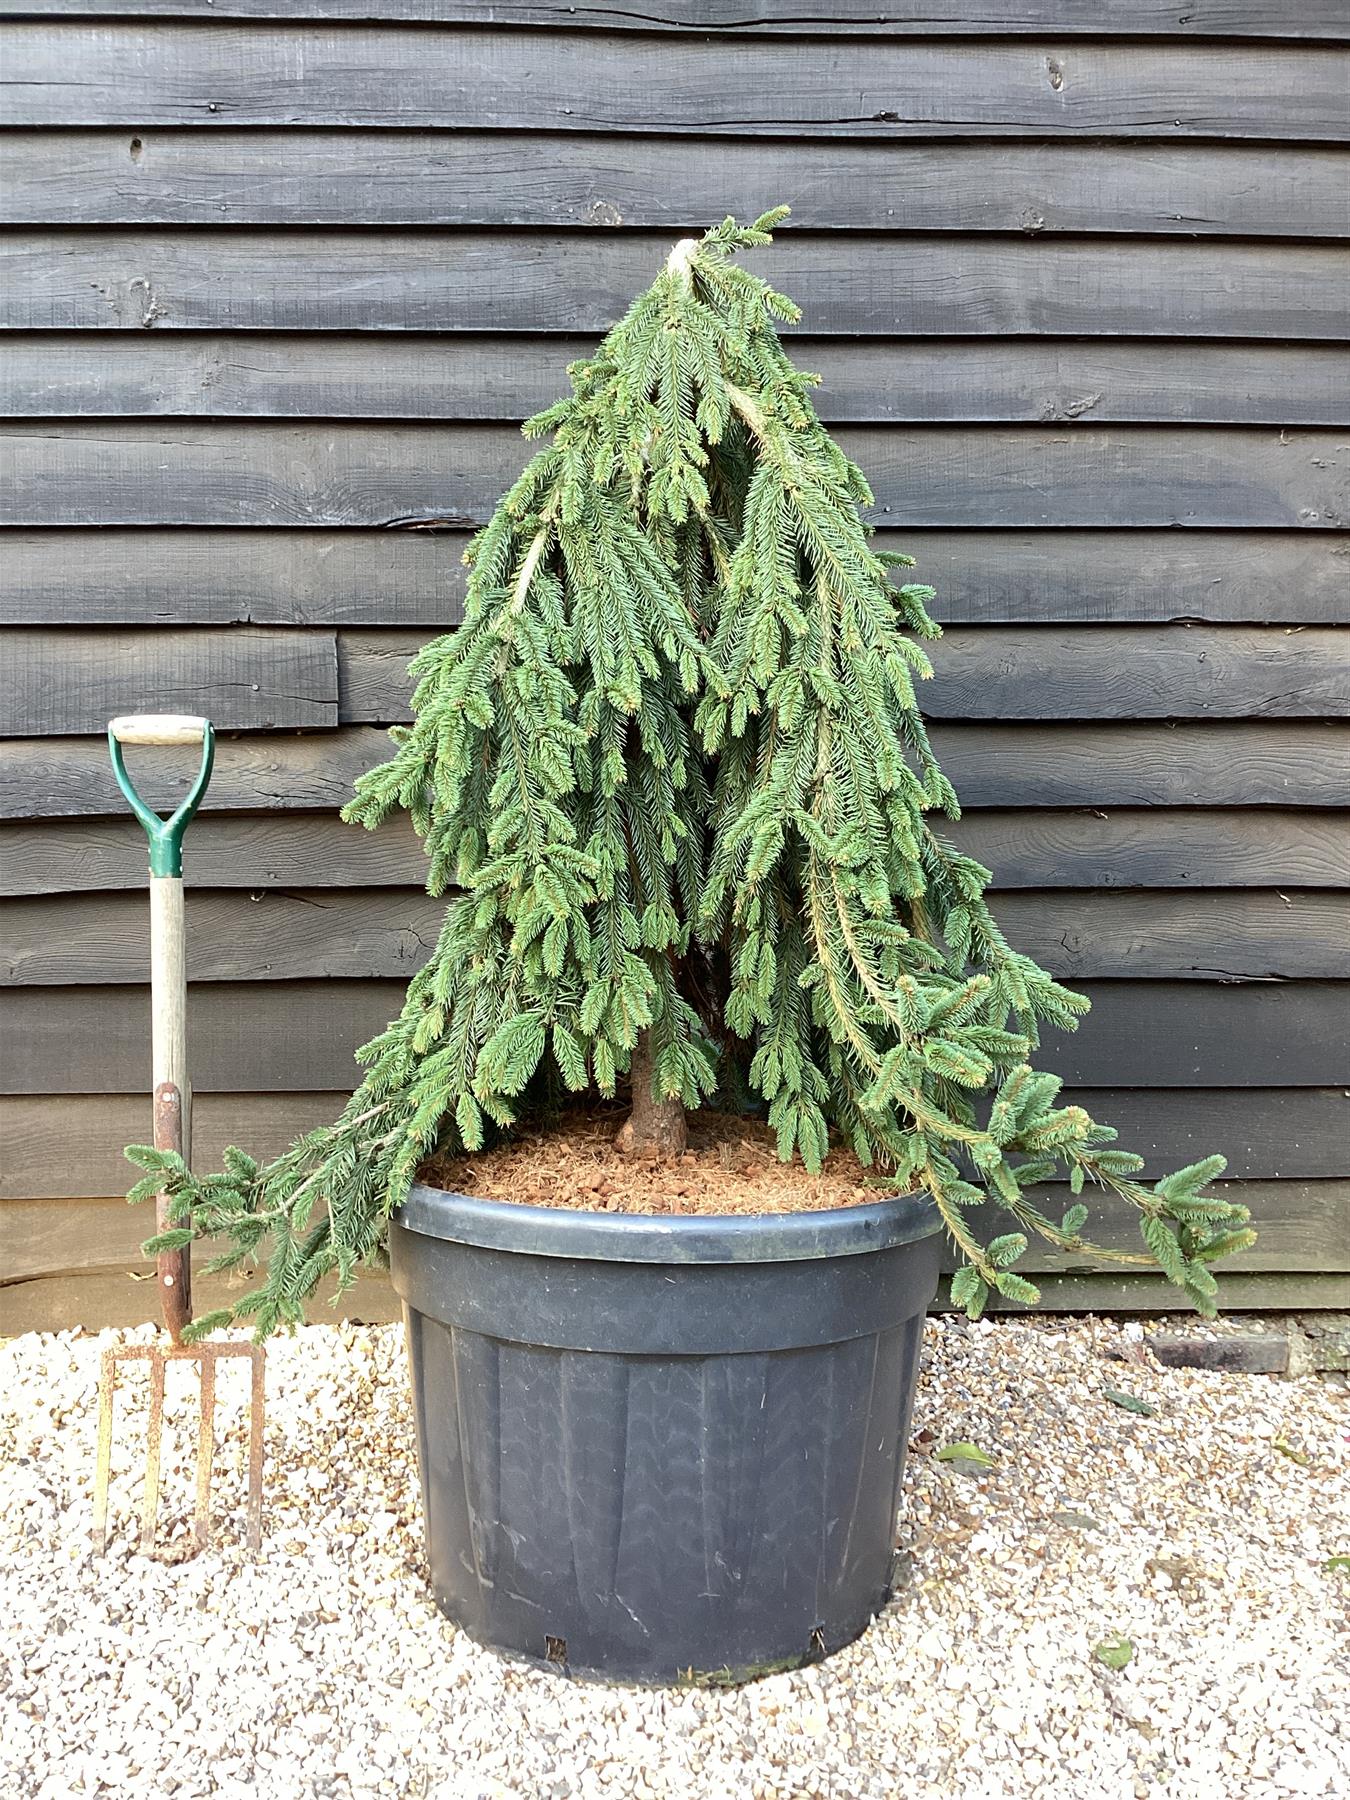 Picea abies 'Inversa' | Norway spruce 'Inversa' - Height 130cm - 130lt